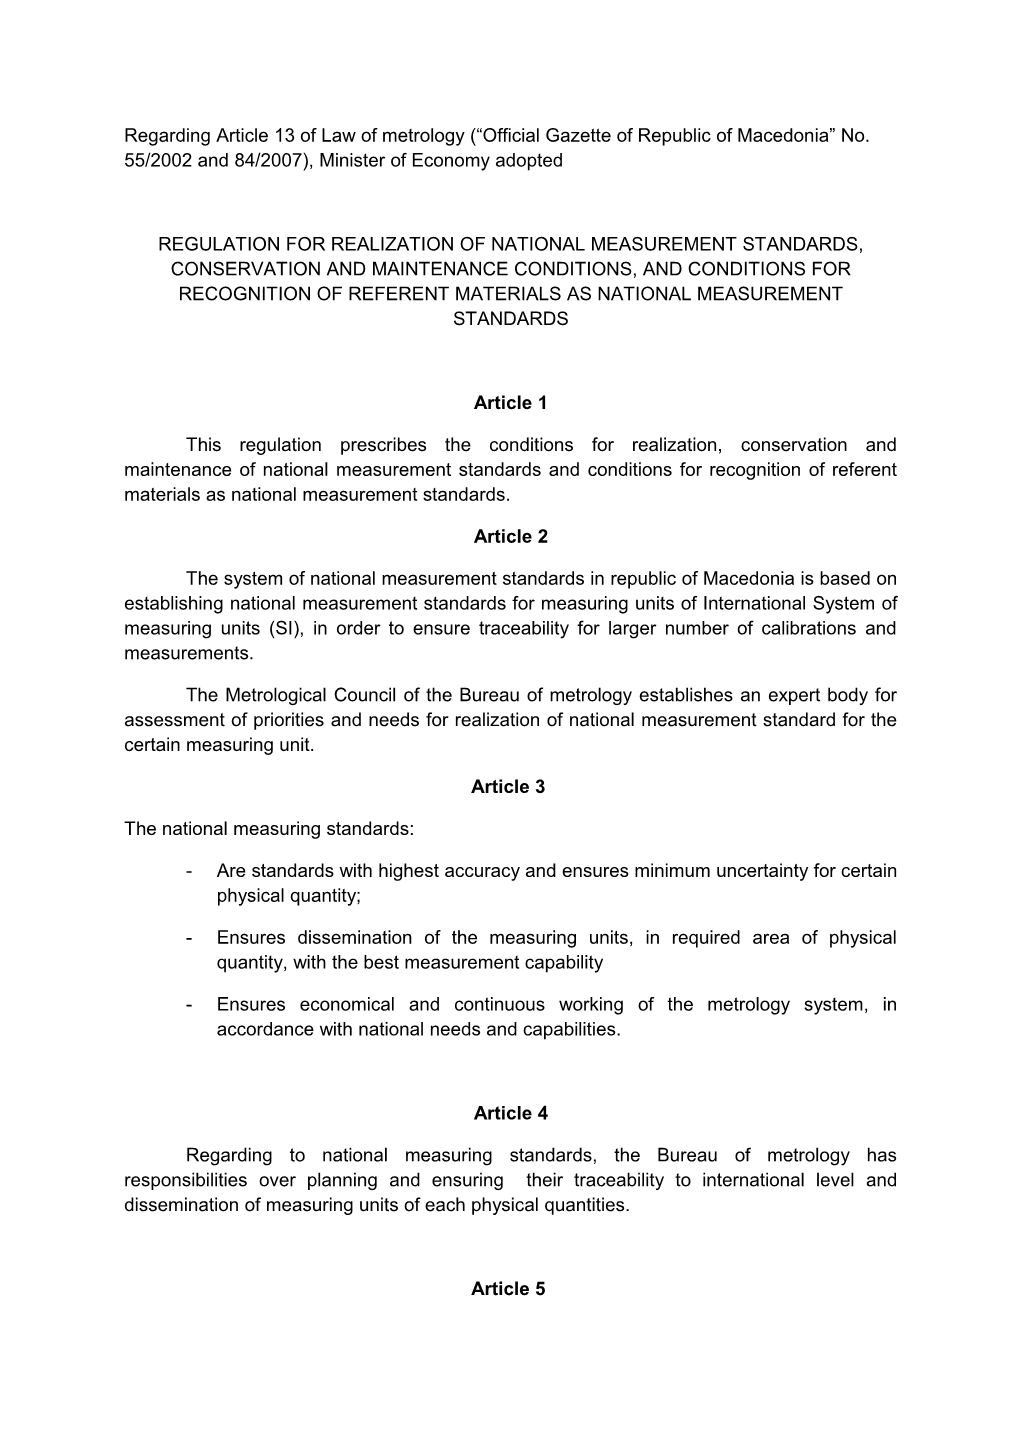 Regarding Article 13 of Law of Metrology ( Official Gazette of Republic of Macedonia No